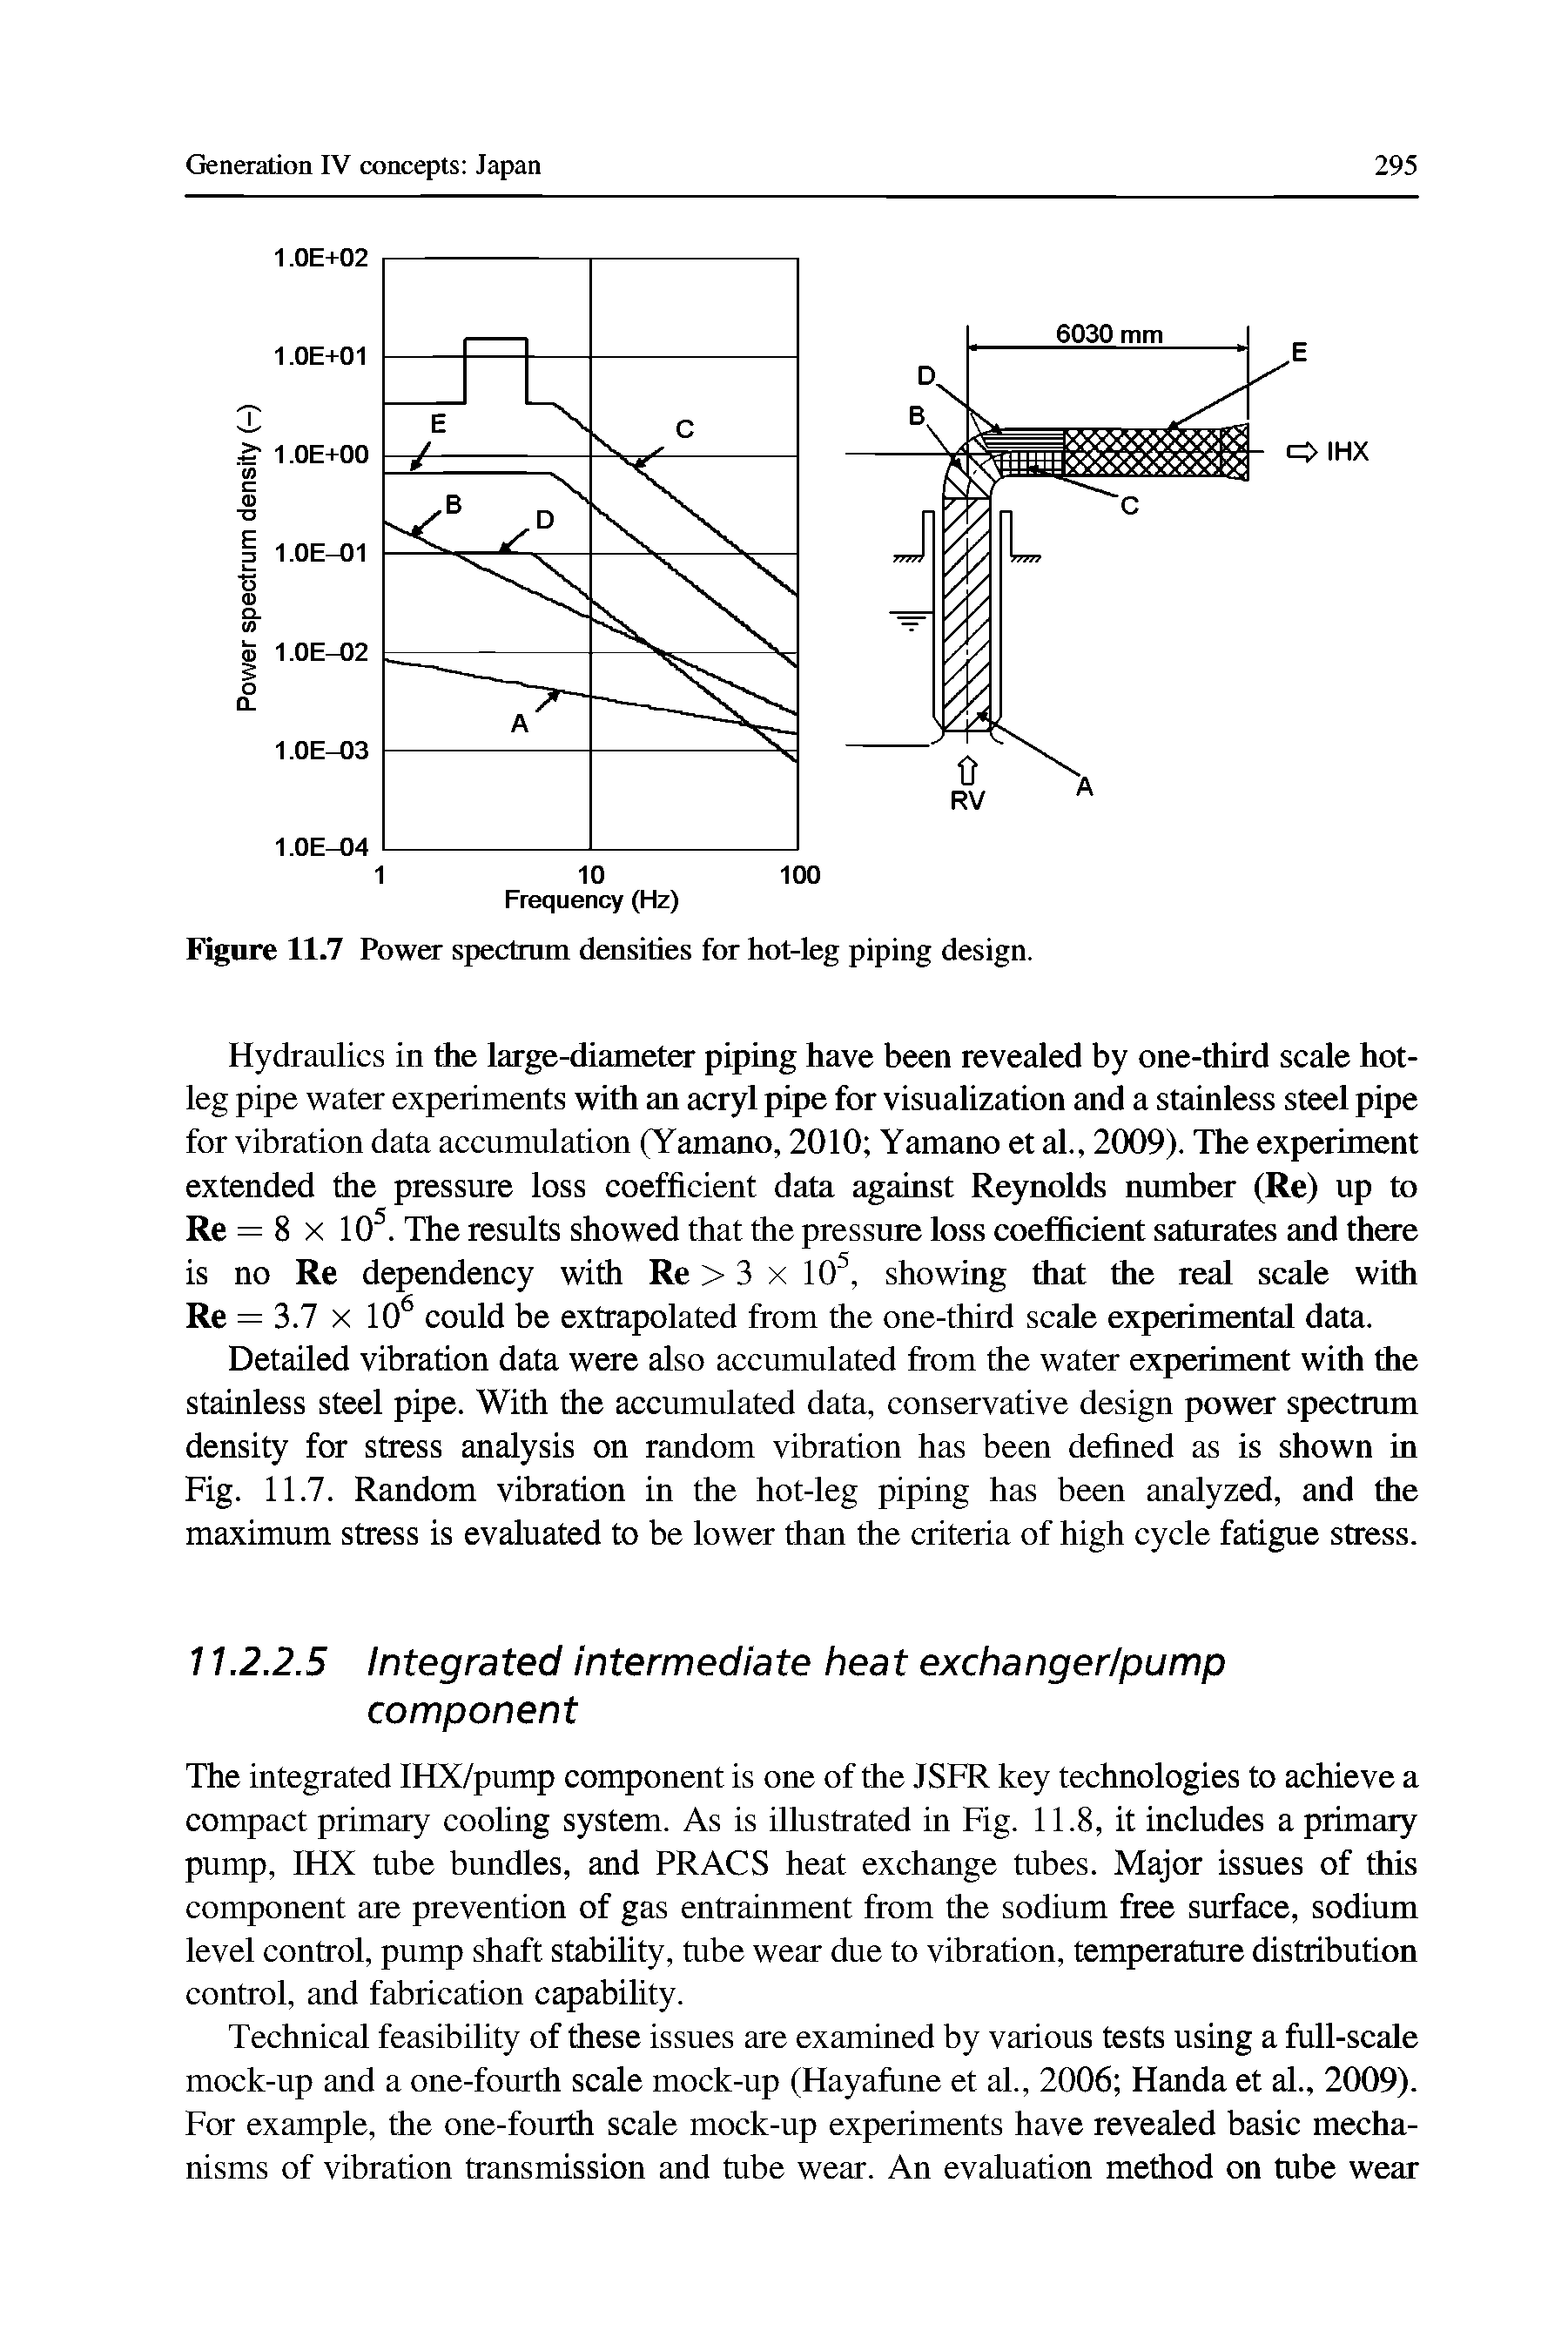 Figure 11.7 Power spectrum densities for hot-leg piping design.